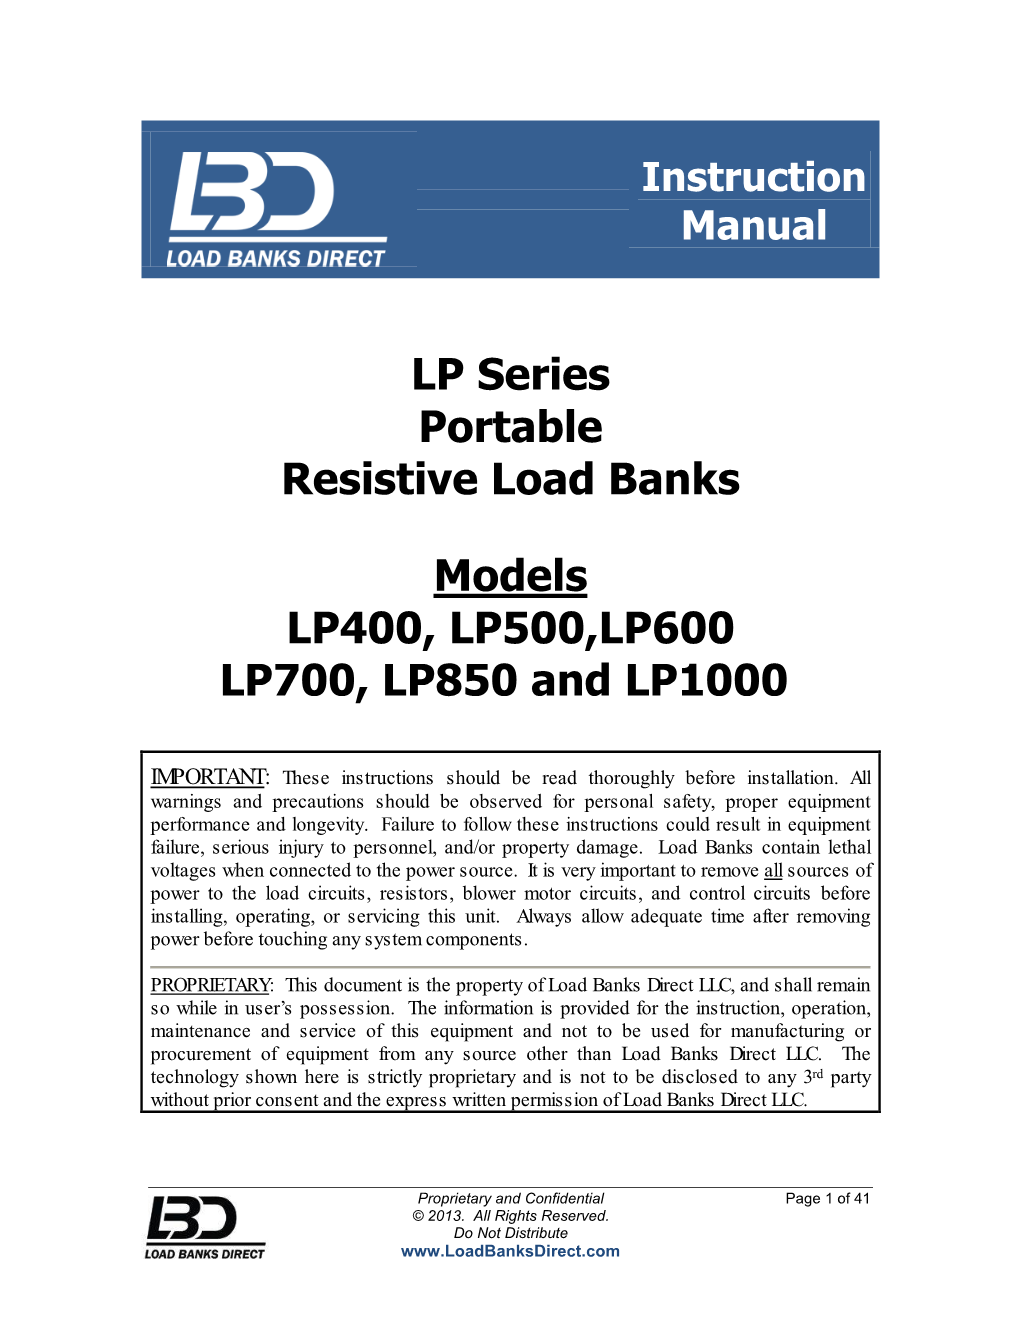 LP Series Portable Resistive Load Banks Models LP400, LP500